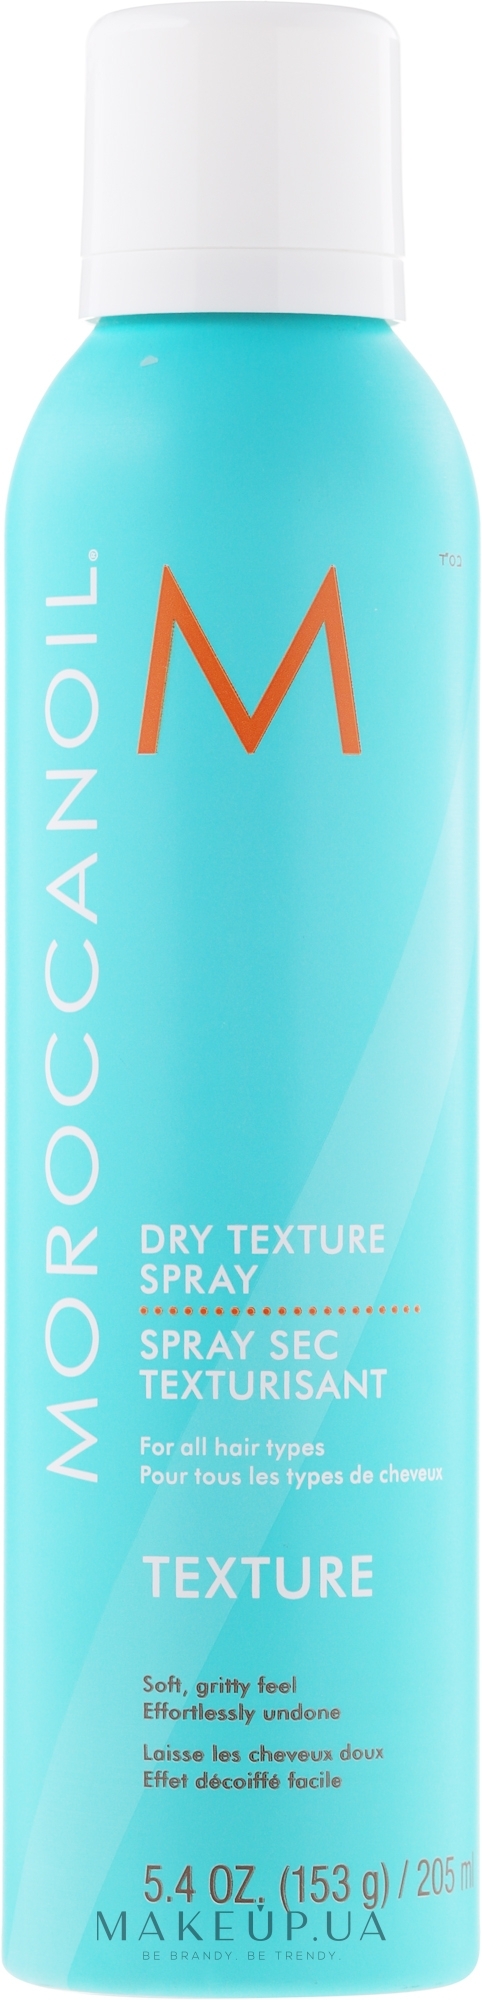 Сухой текстурный спрей для волос - Moroccanoil Dry Texture Spray — фото 205ml